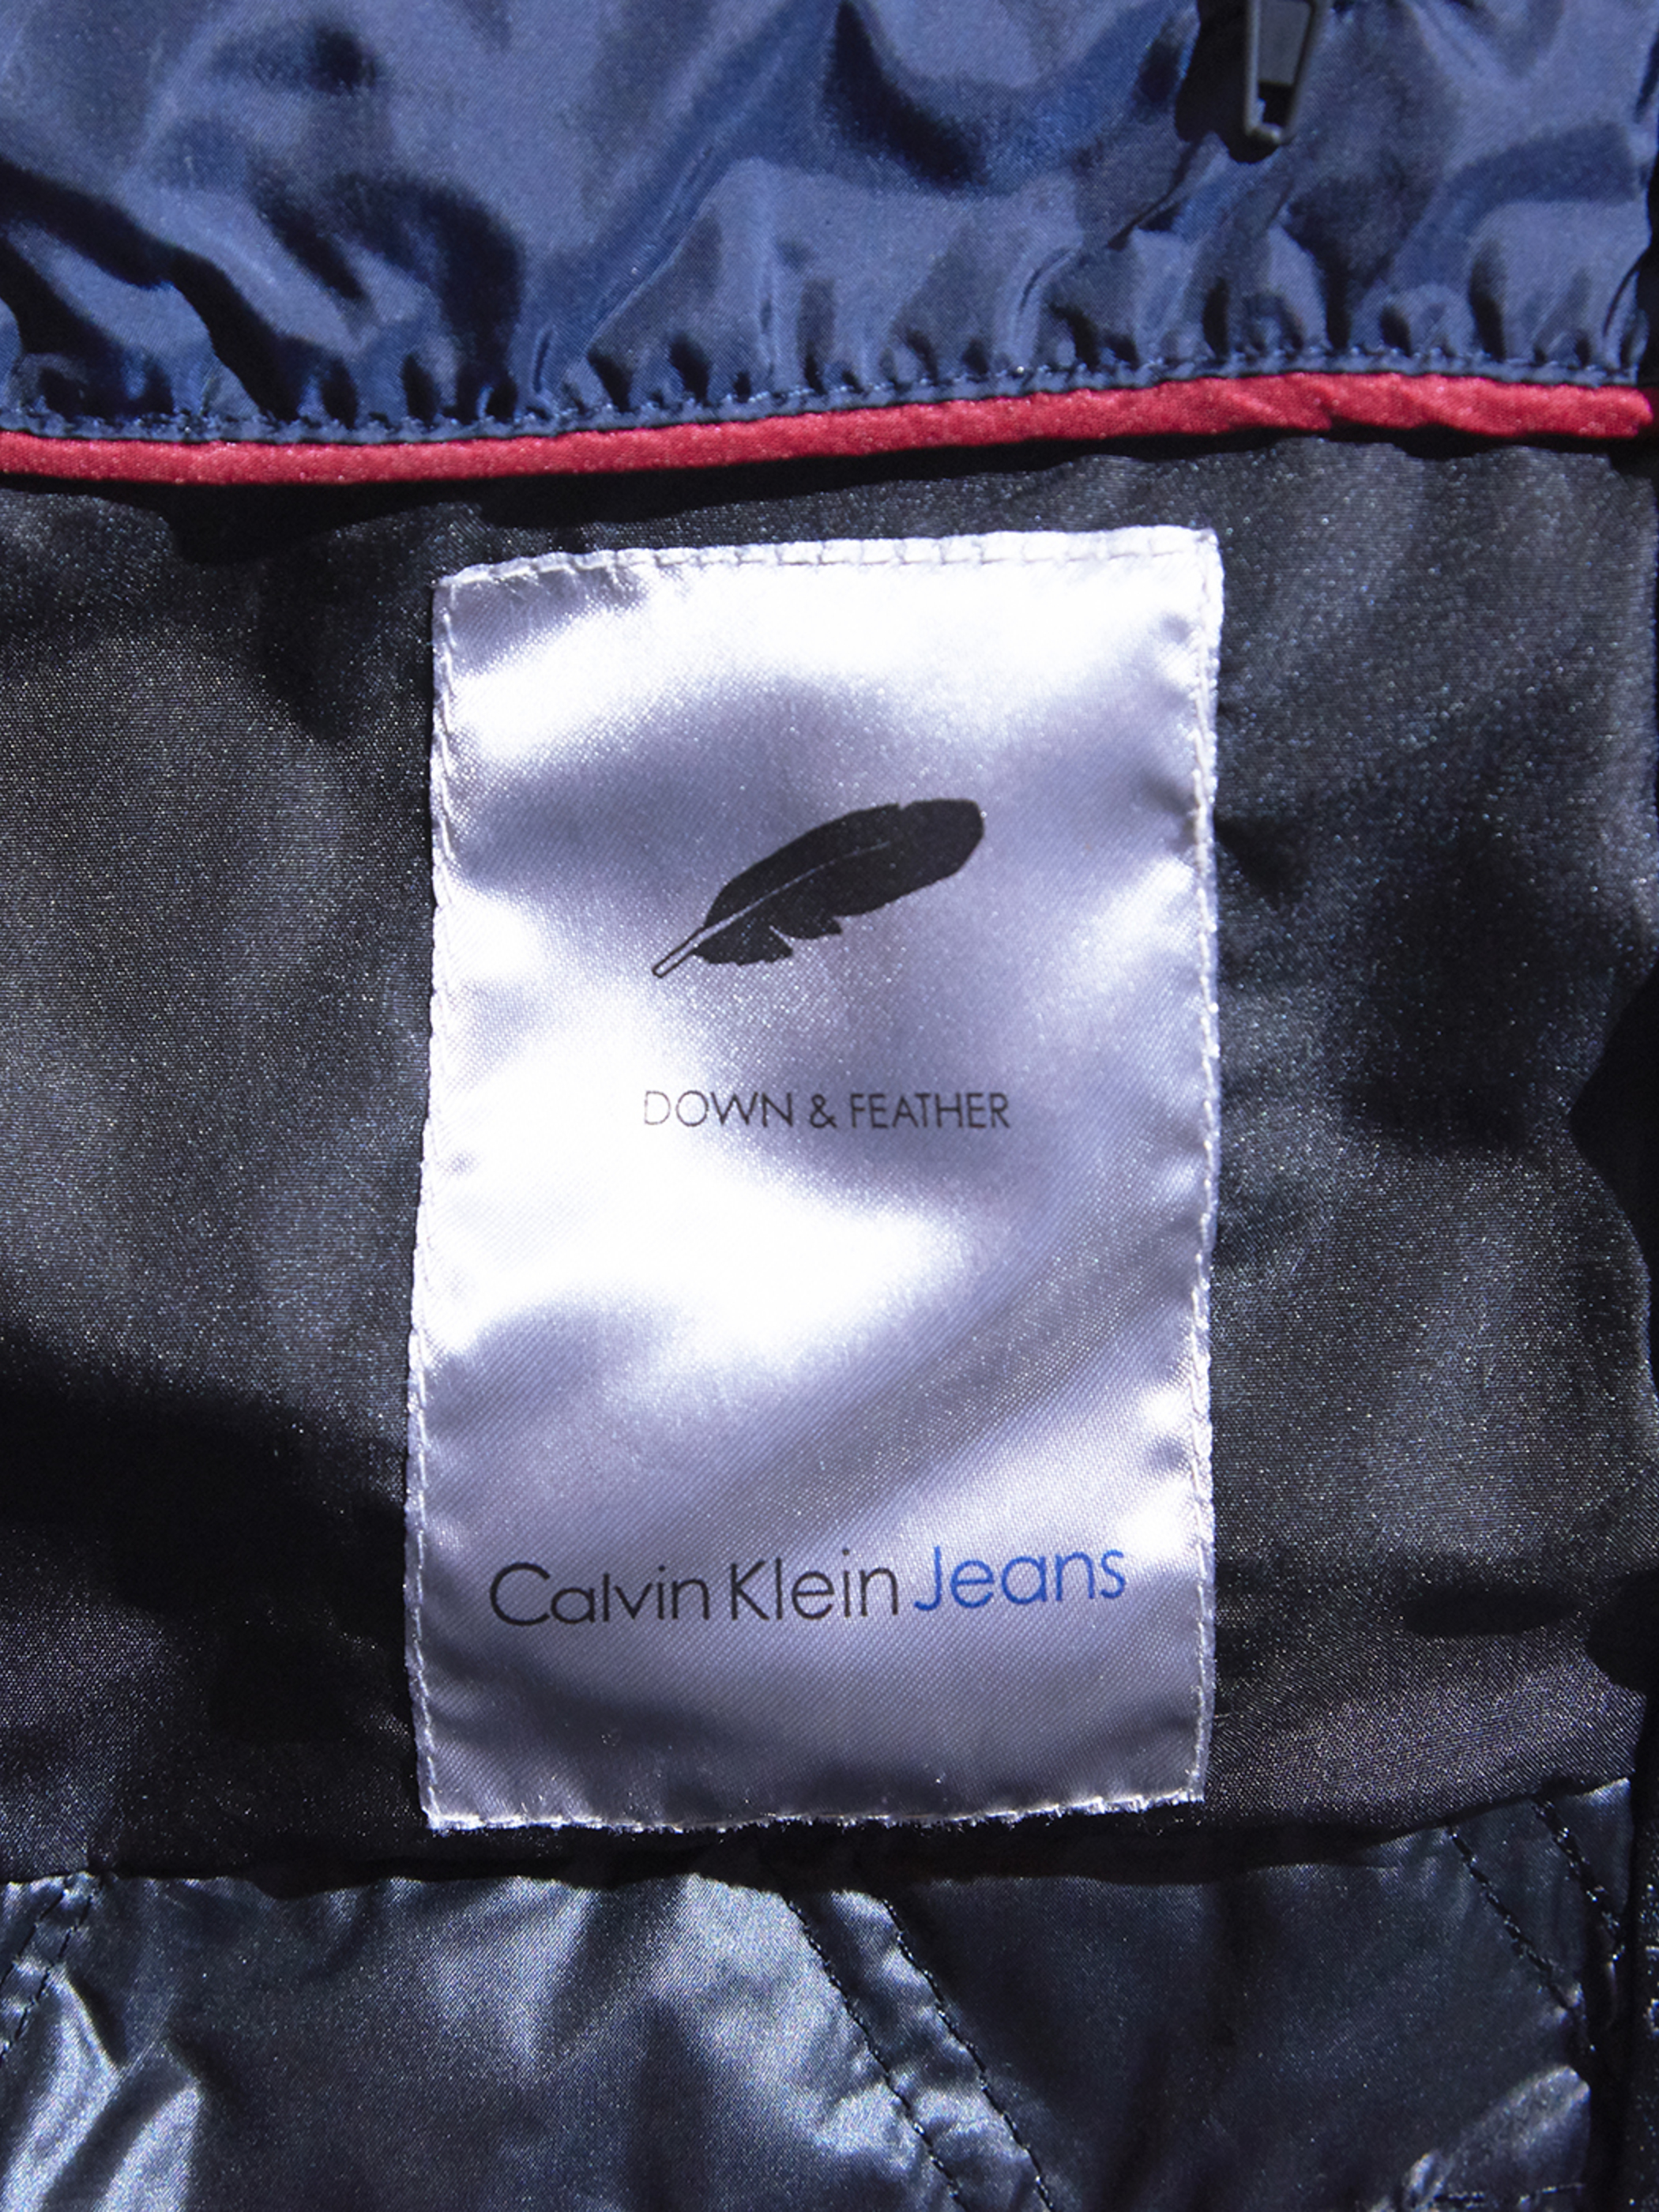 NOS 2000s "Calvin Klein Jeans" hooded down coat -NAVY-